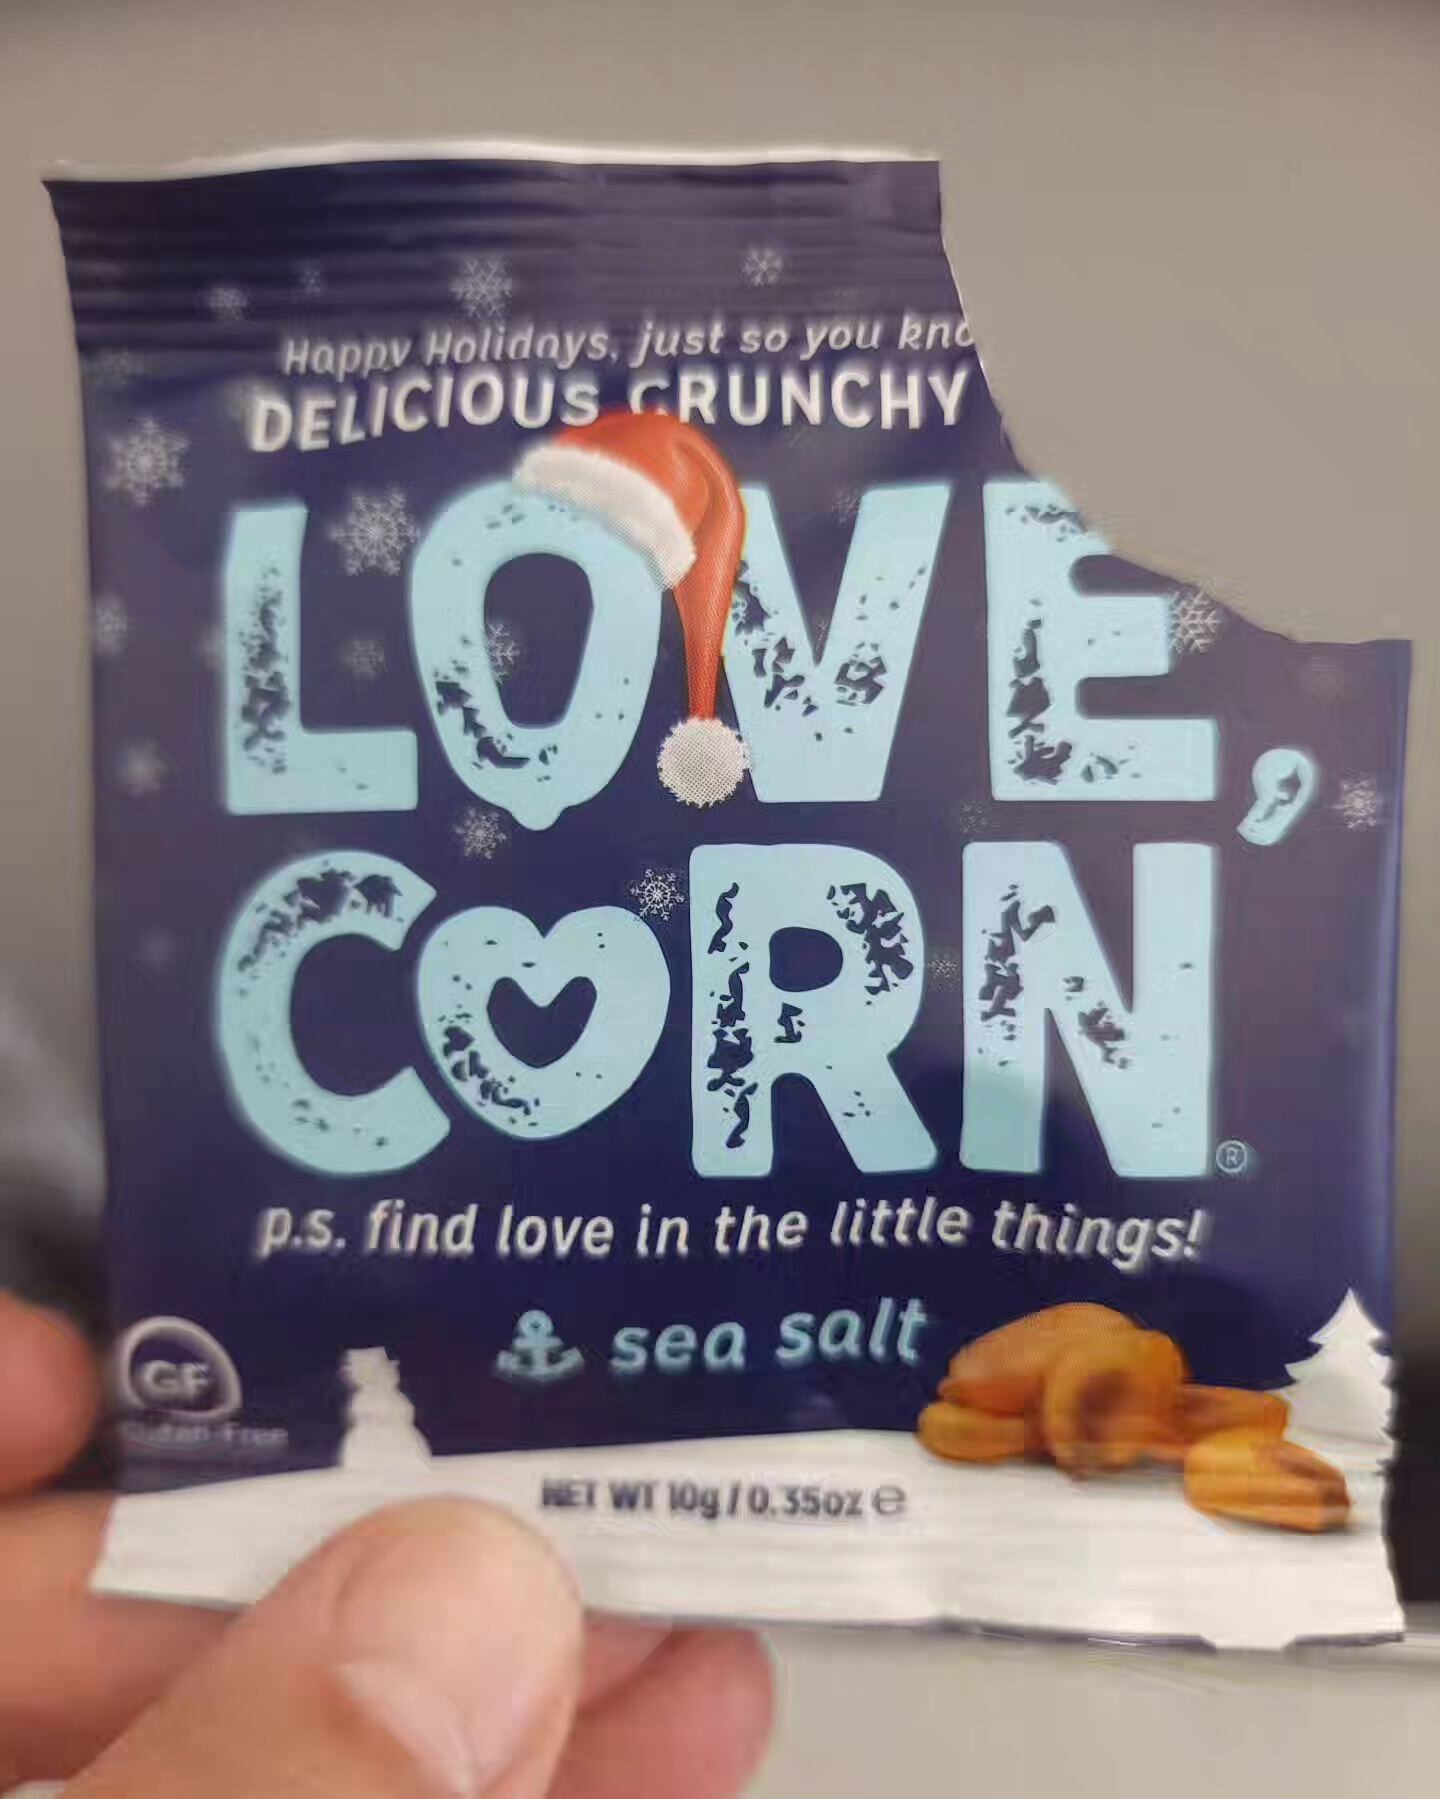 LOVE Corn

Thanks @british_airways #lovecorn @lovecorn_snacks